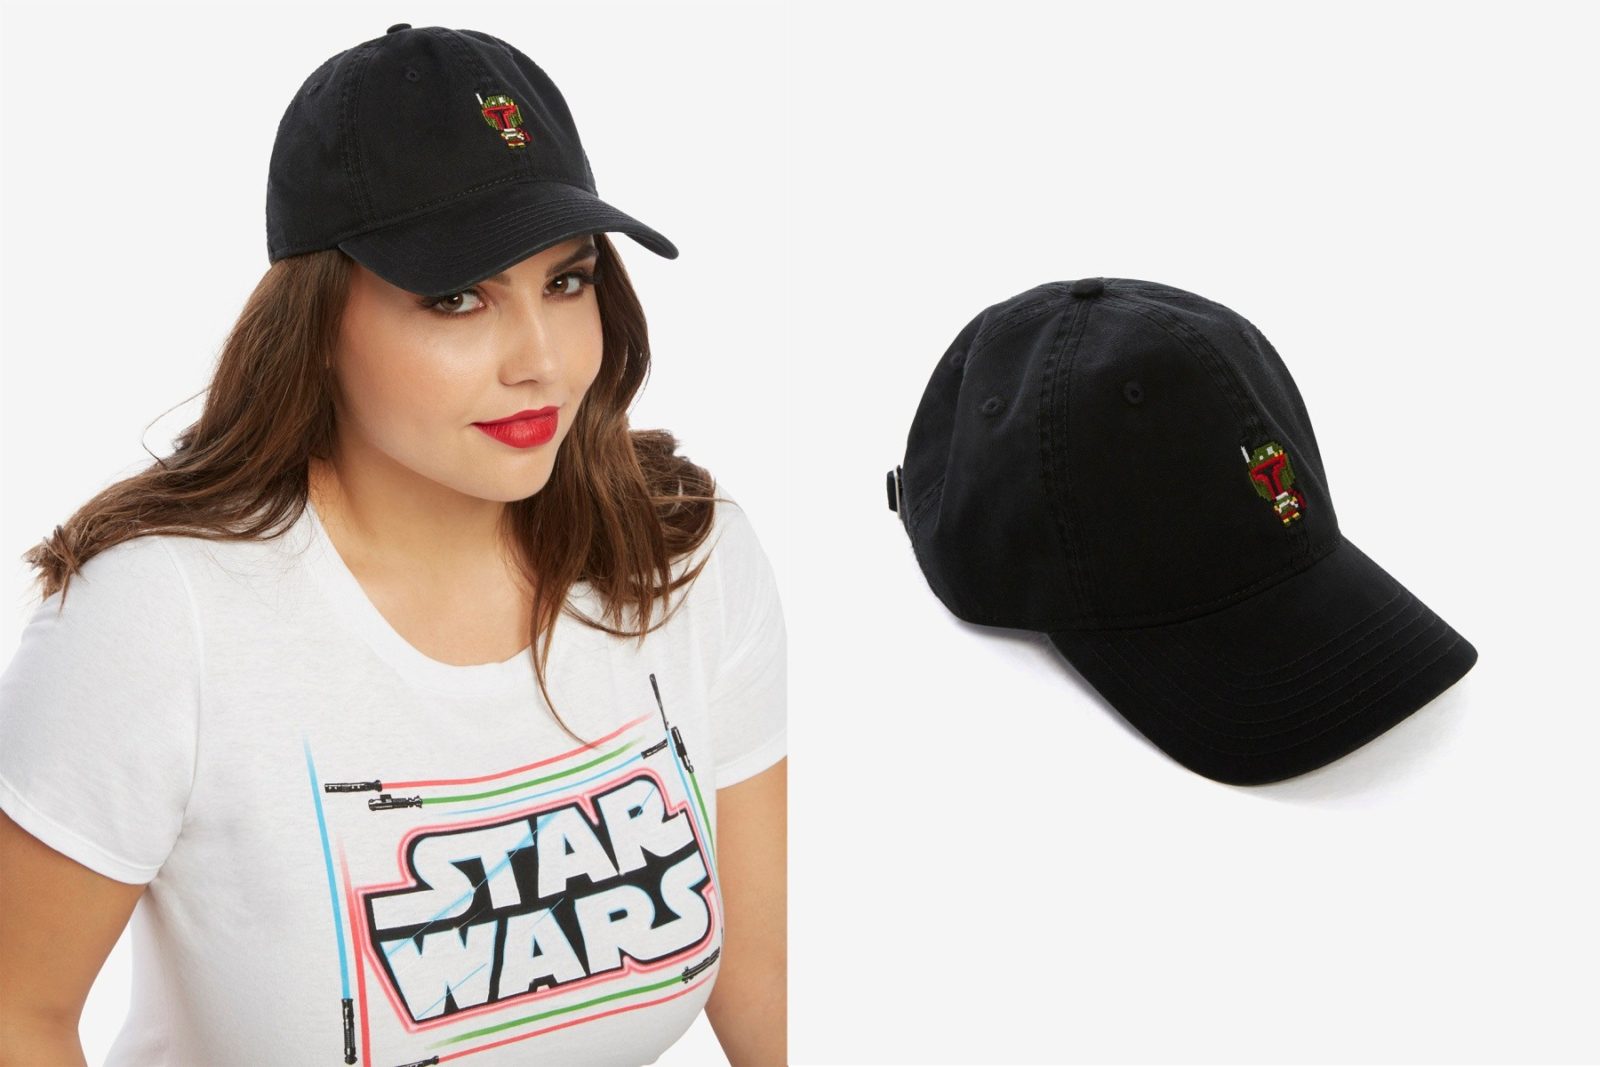 Star Wars Chibi Boba Fett embroidred baseball cap at Her Universe